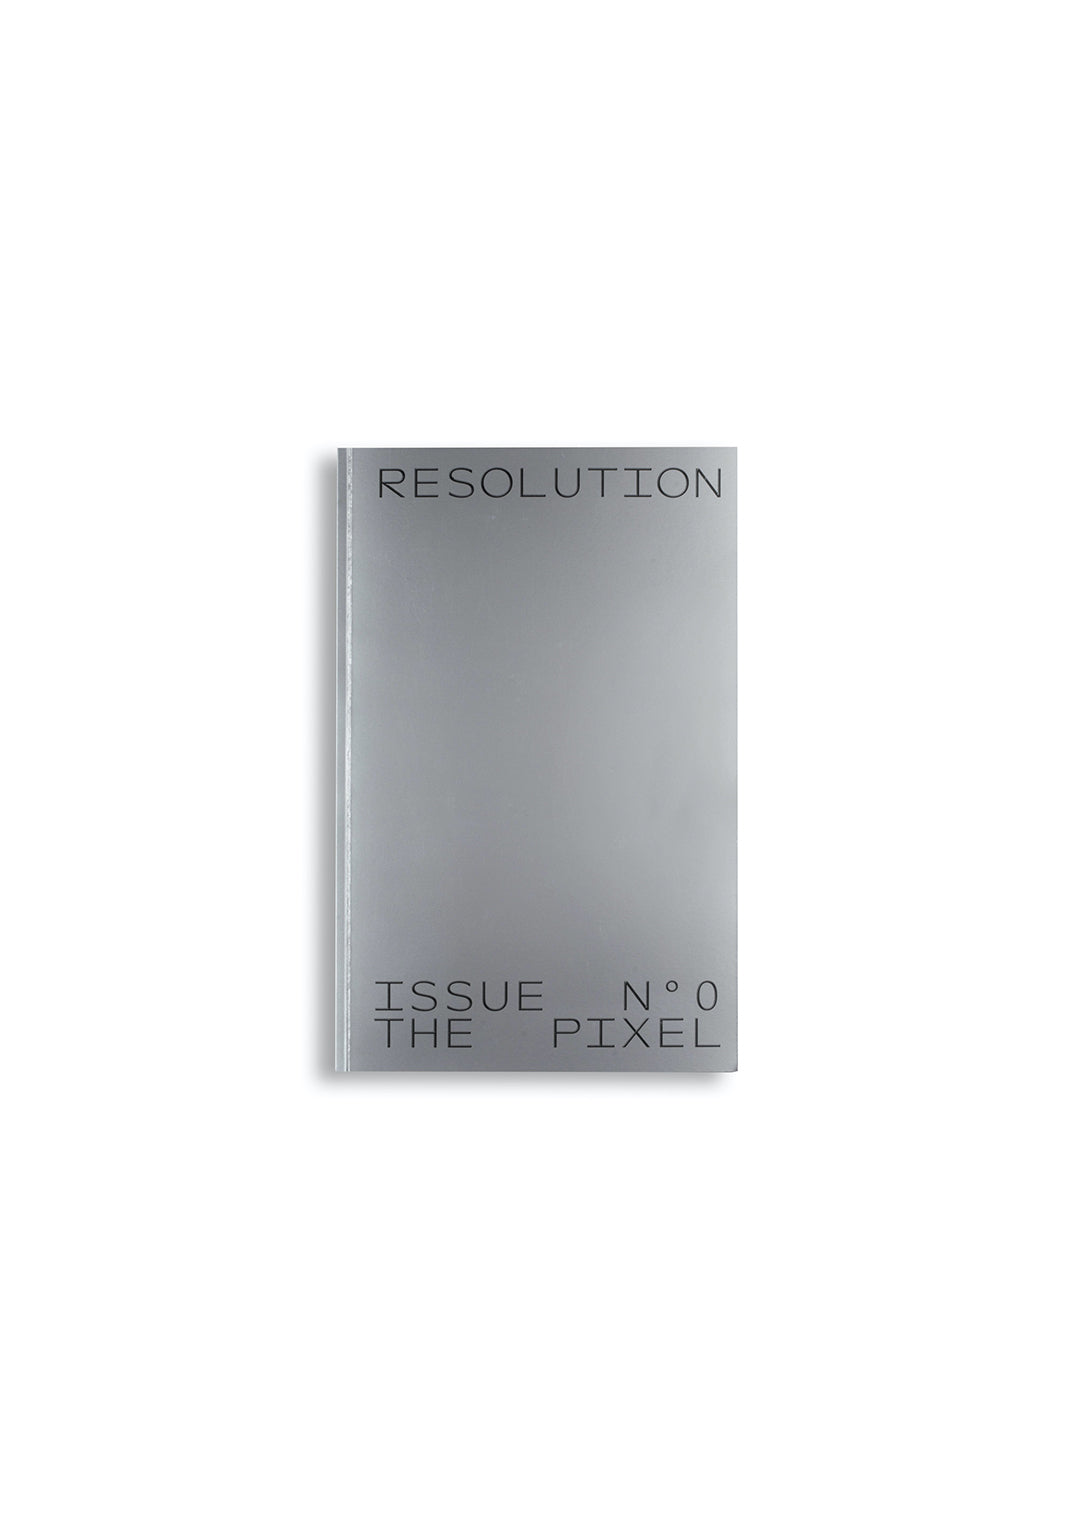 RESOLUTION magazine #0: The Pixel